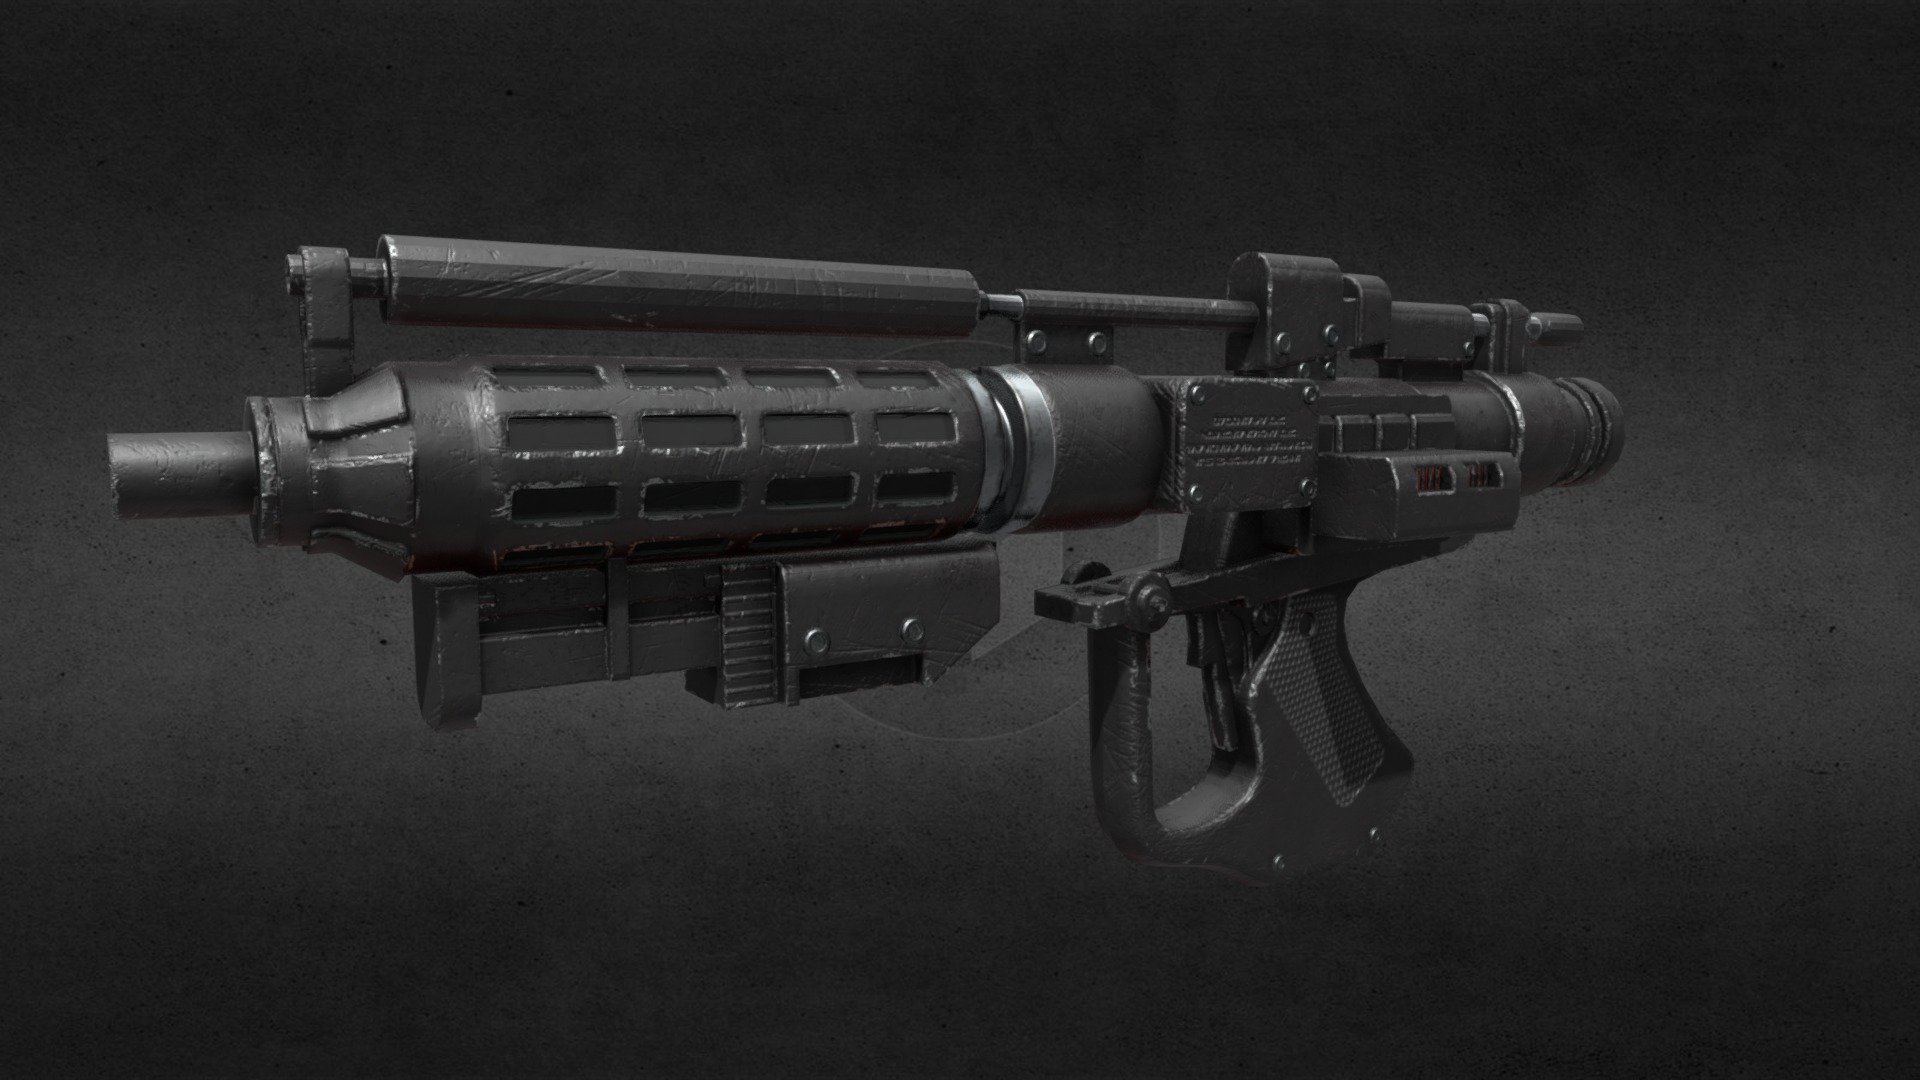 Star Wars E 5 Blaster Rifle Model By TBRO13 [d465b88]